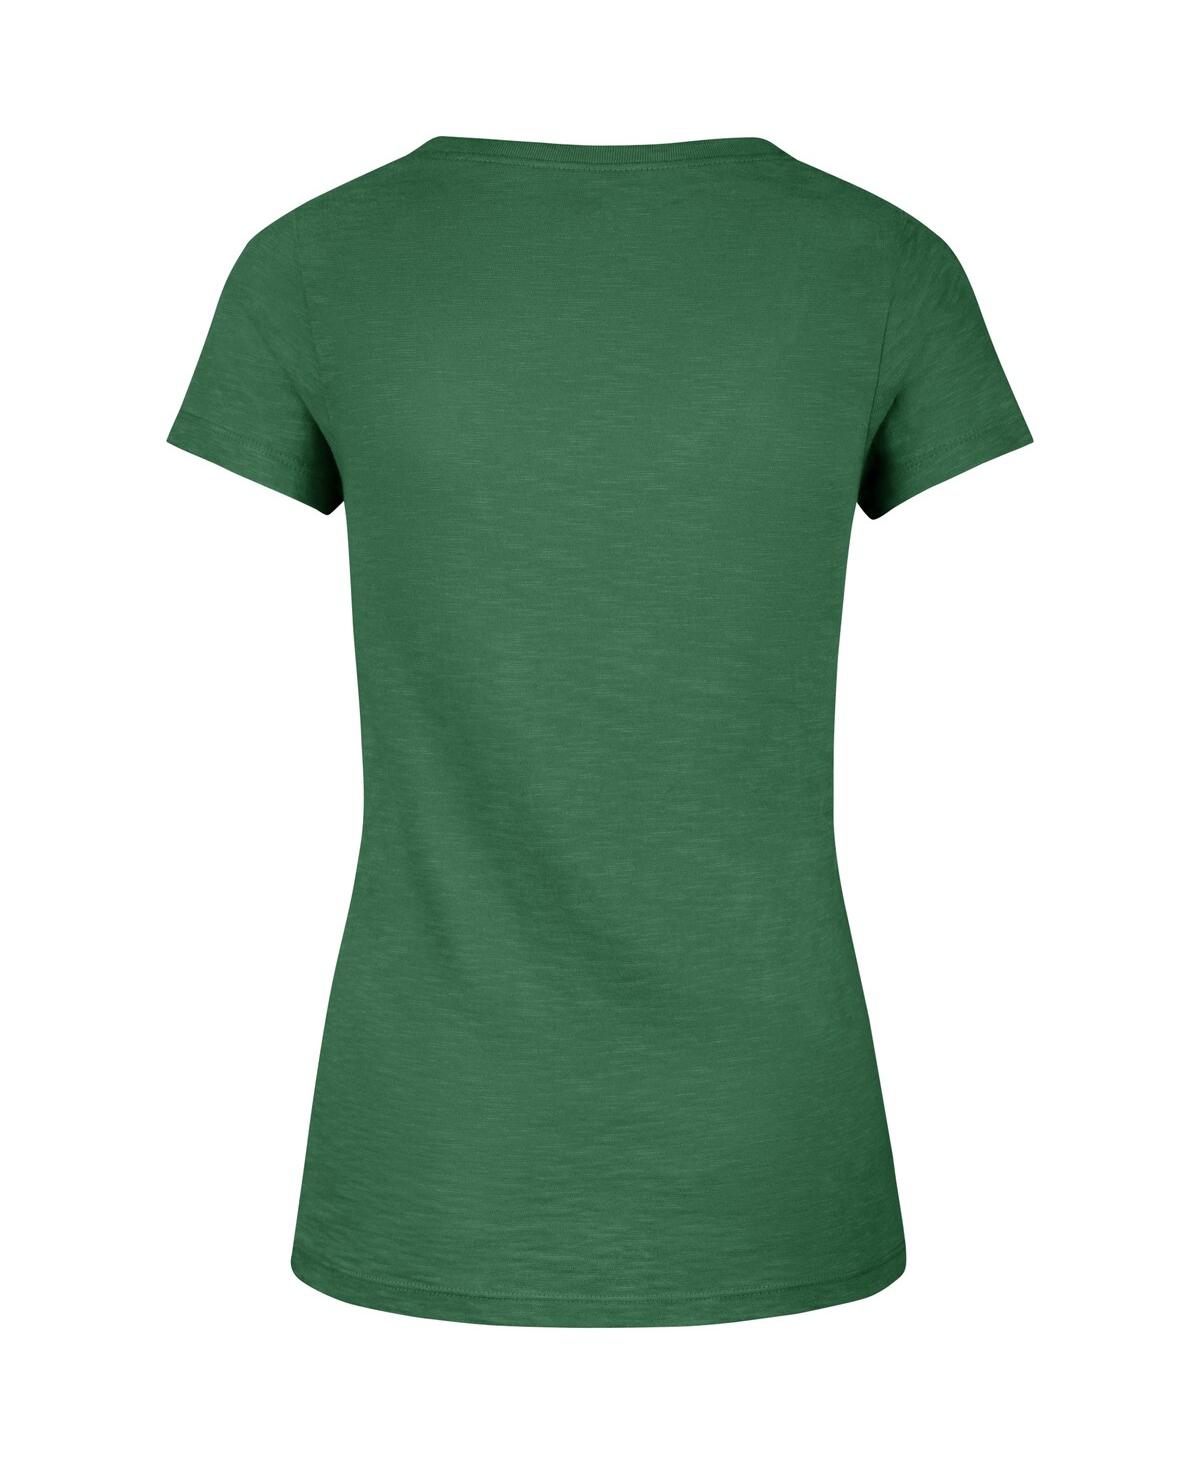 Shop 47 Brand Women's ' Kelly Green Distressed Philadelphia Eagles Throwback Scrum V-neck T-shirt